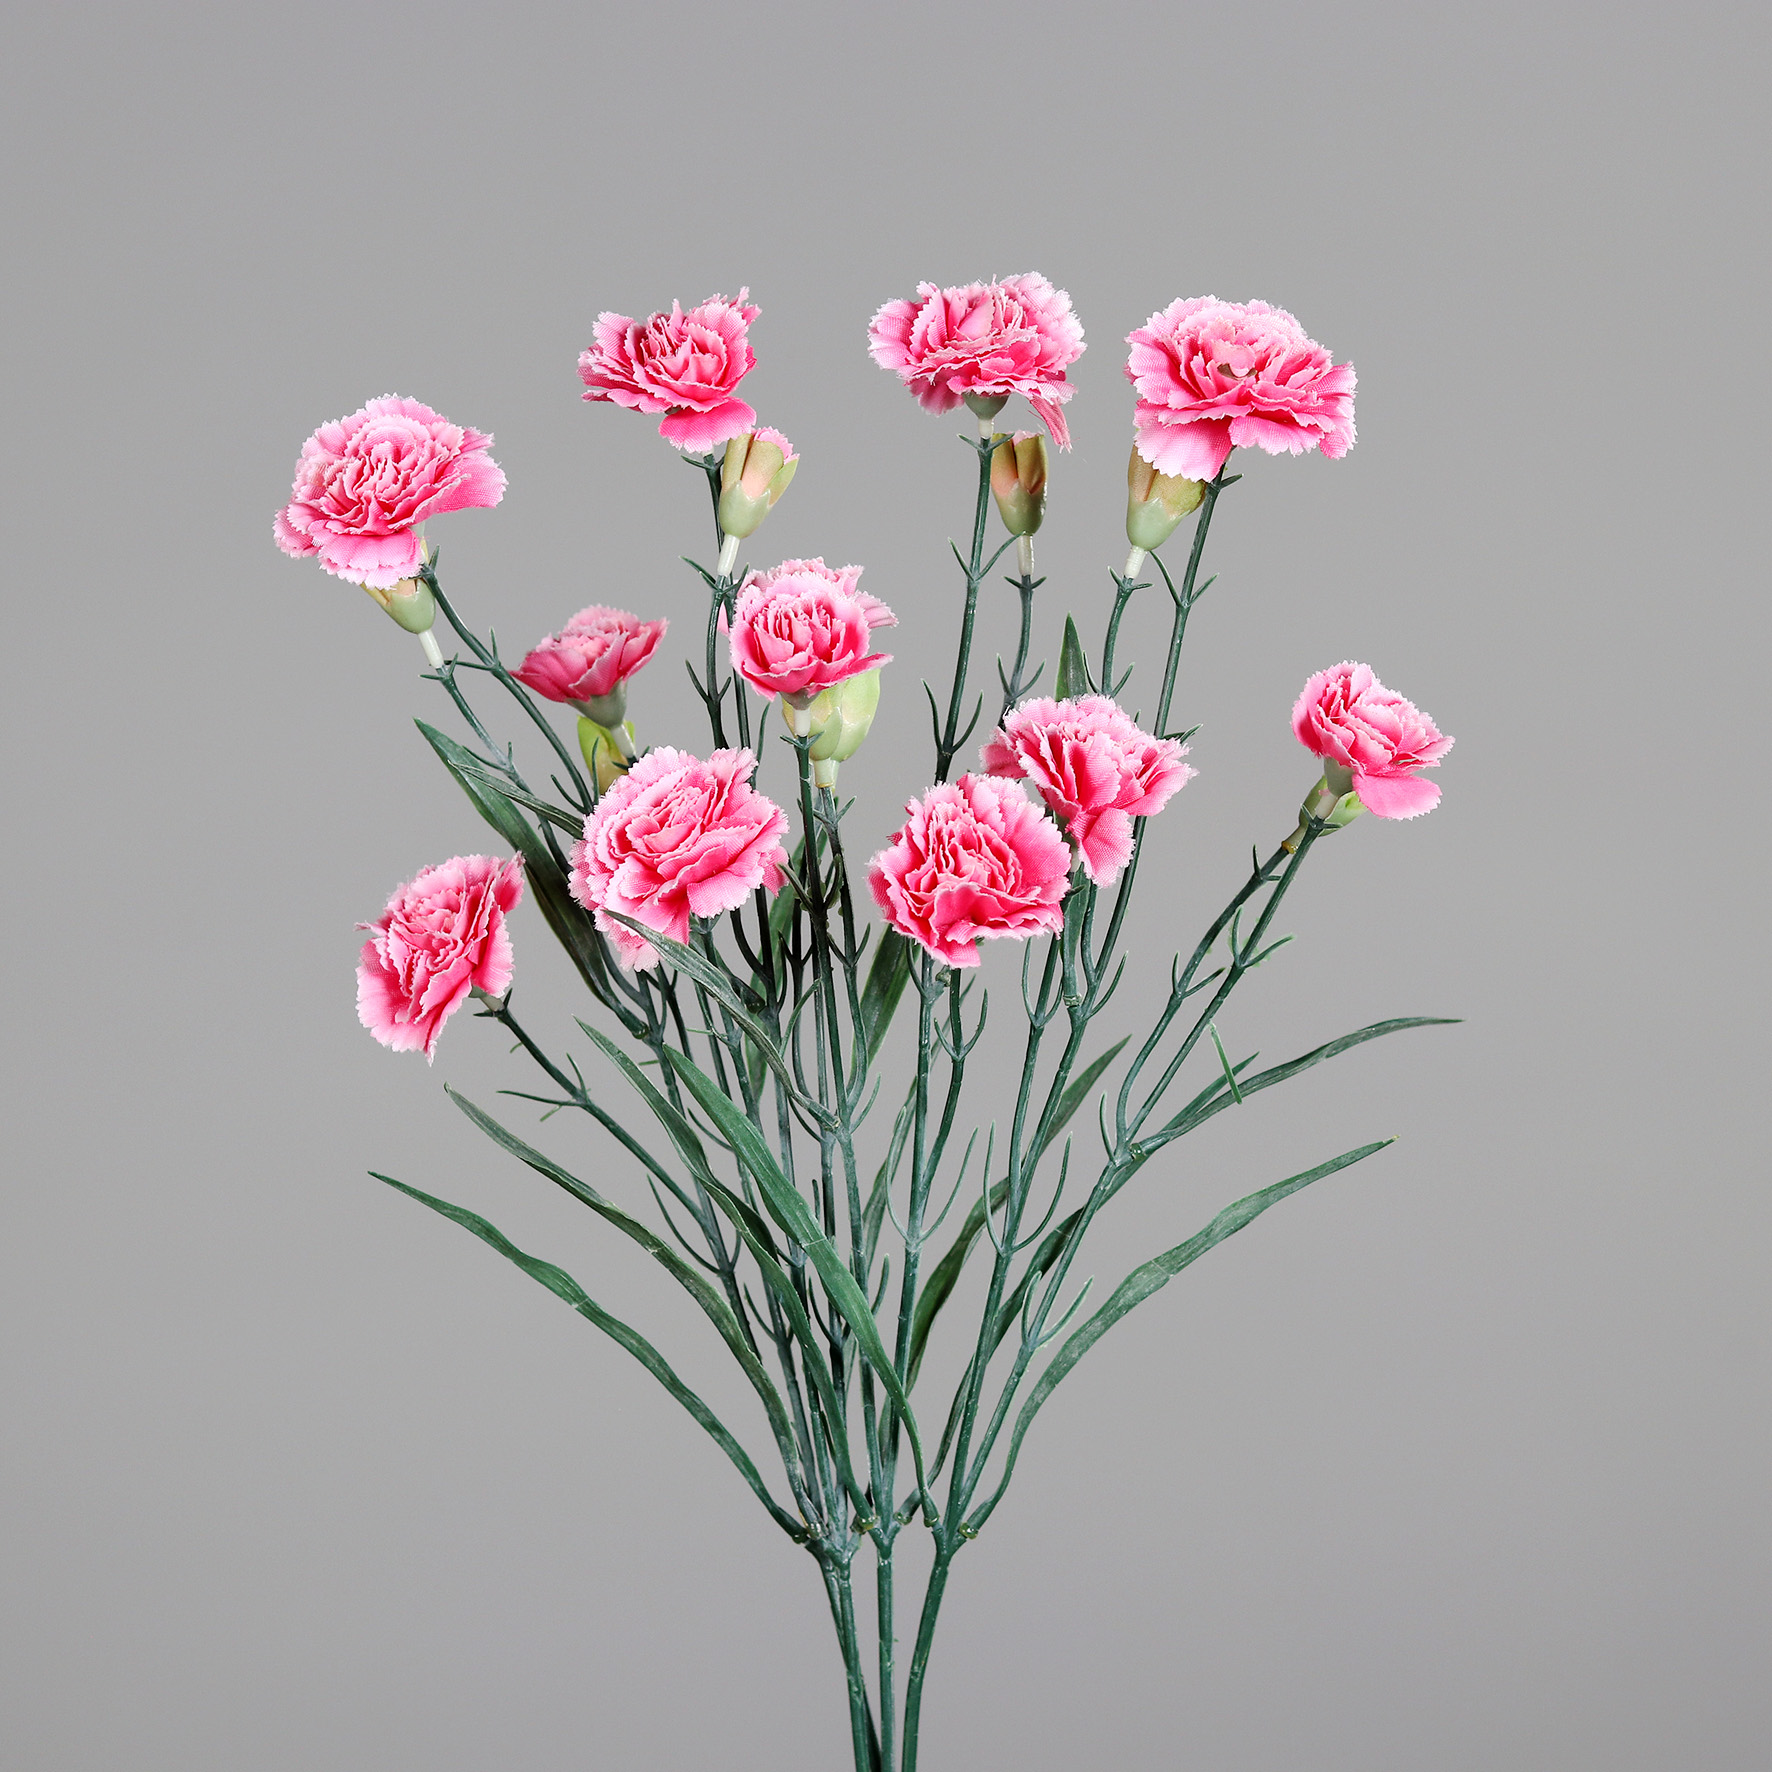 Trossnelkenbusch 50cm rosa-pink DP Kunstblumen künstliche Nelke Nelken Trossnelken Blumen